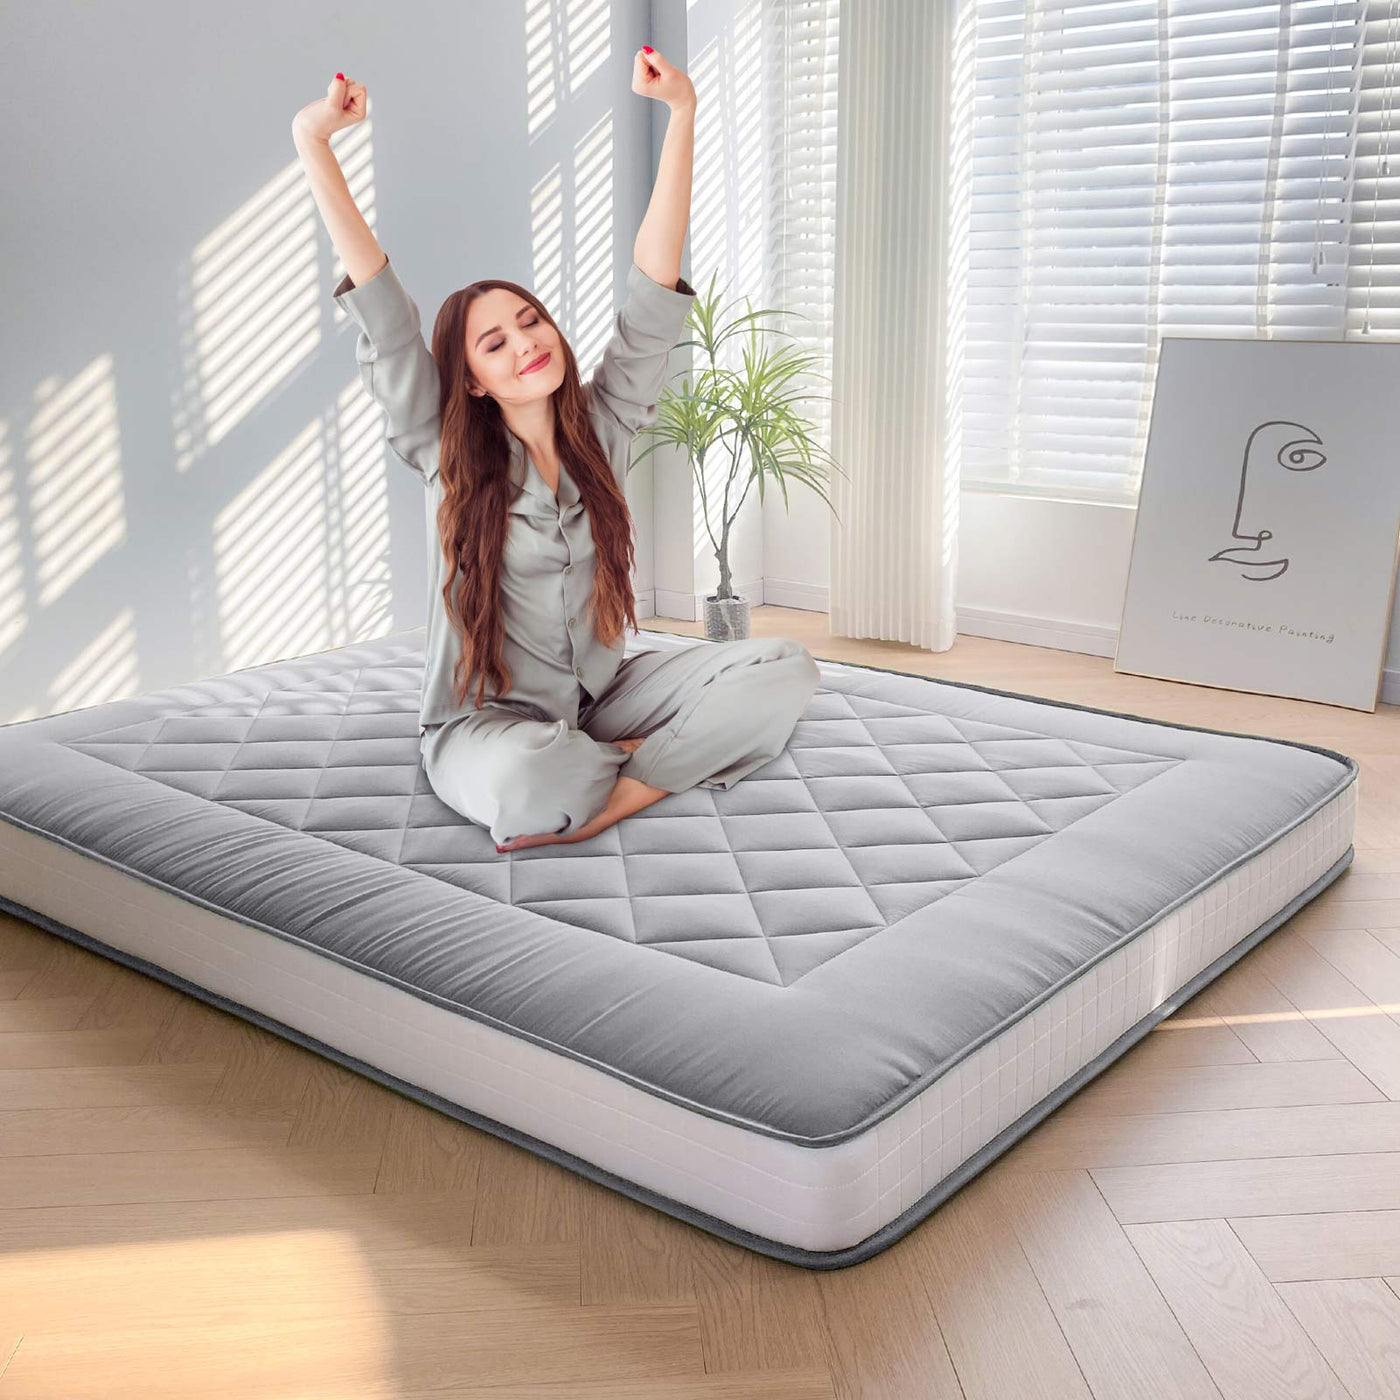 MAXYOYO 6" Extra Thick Japanese Futon Mattress, Stylish Diamond Quilting Floor Bed For Bedroom, Grey